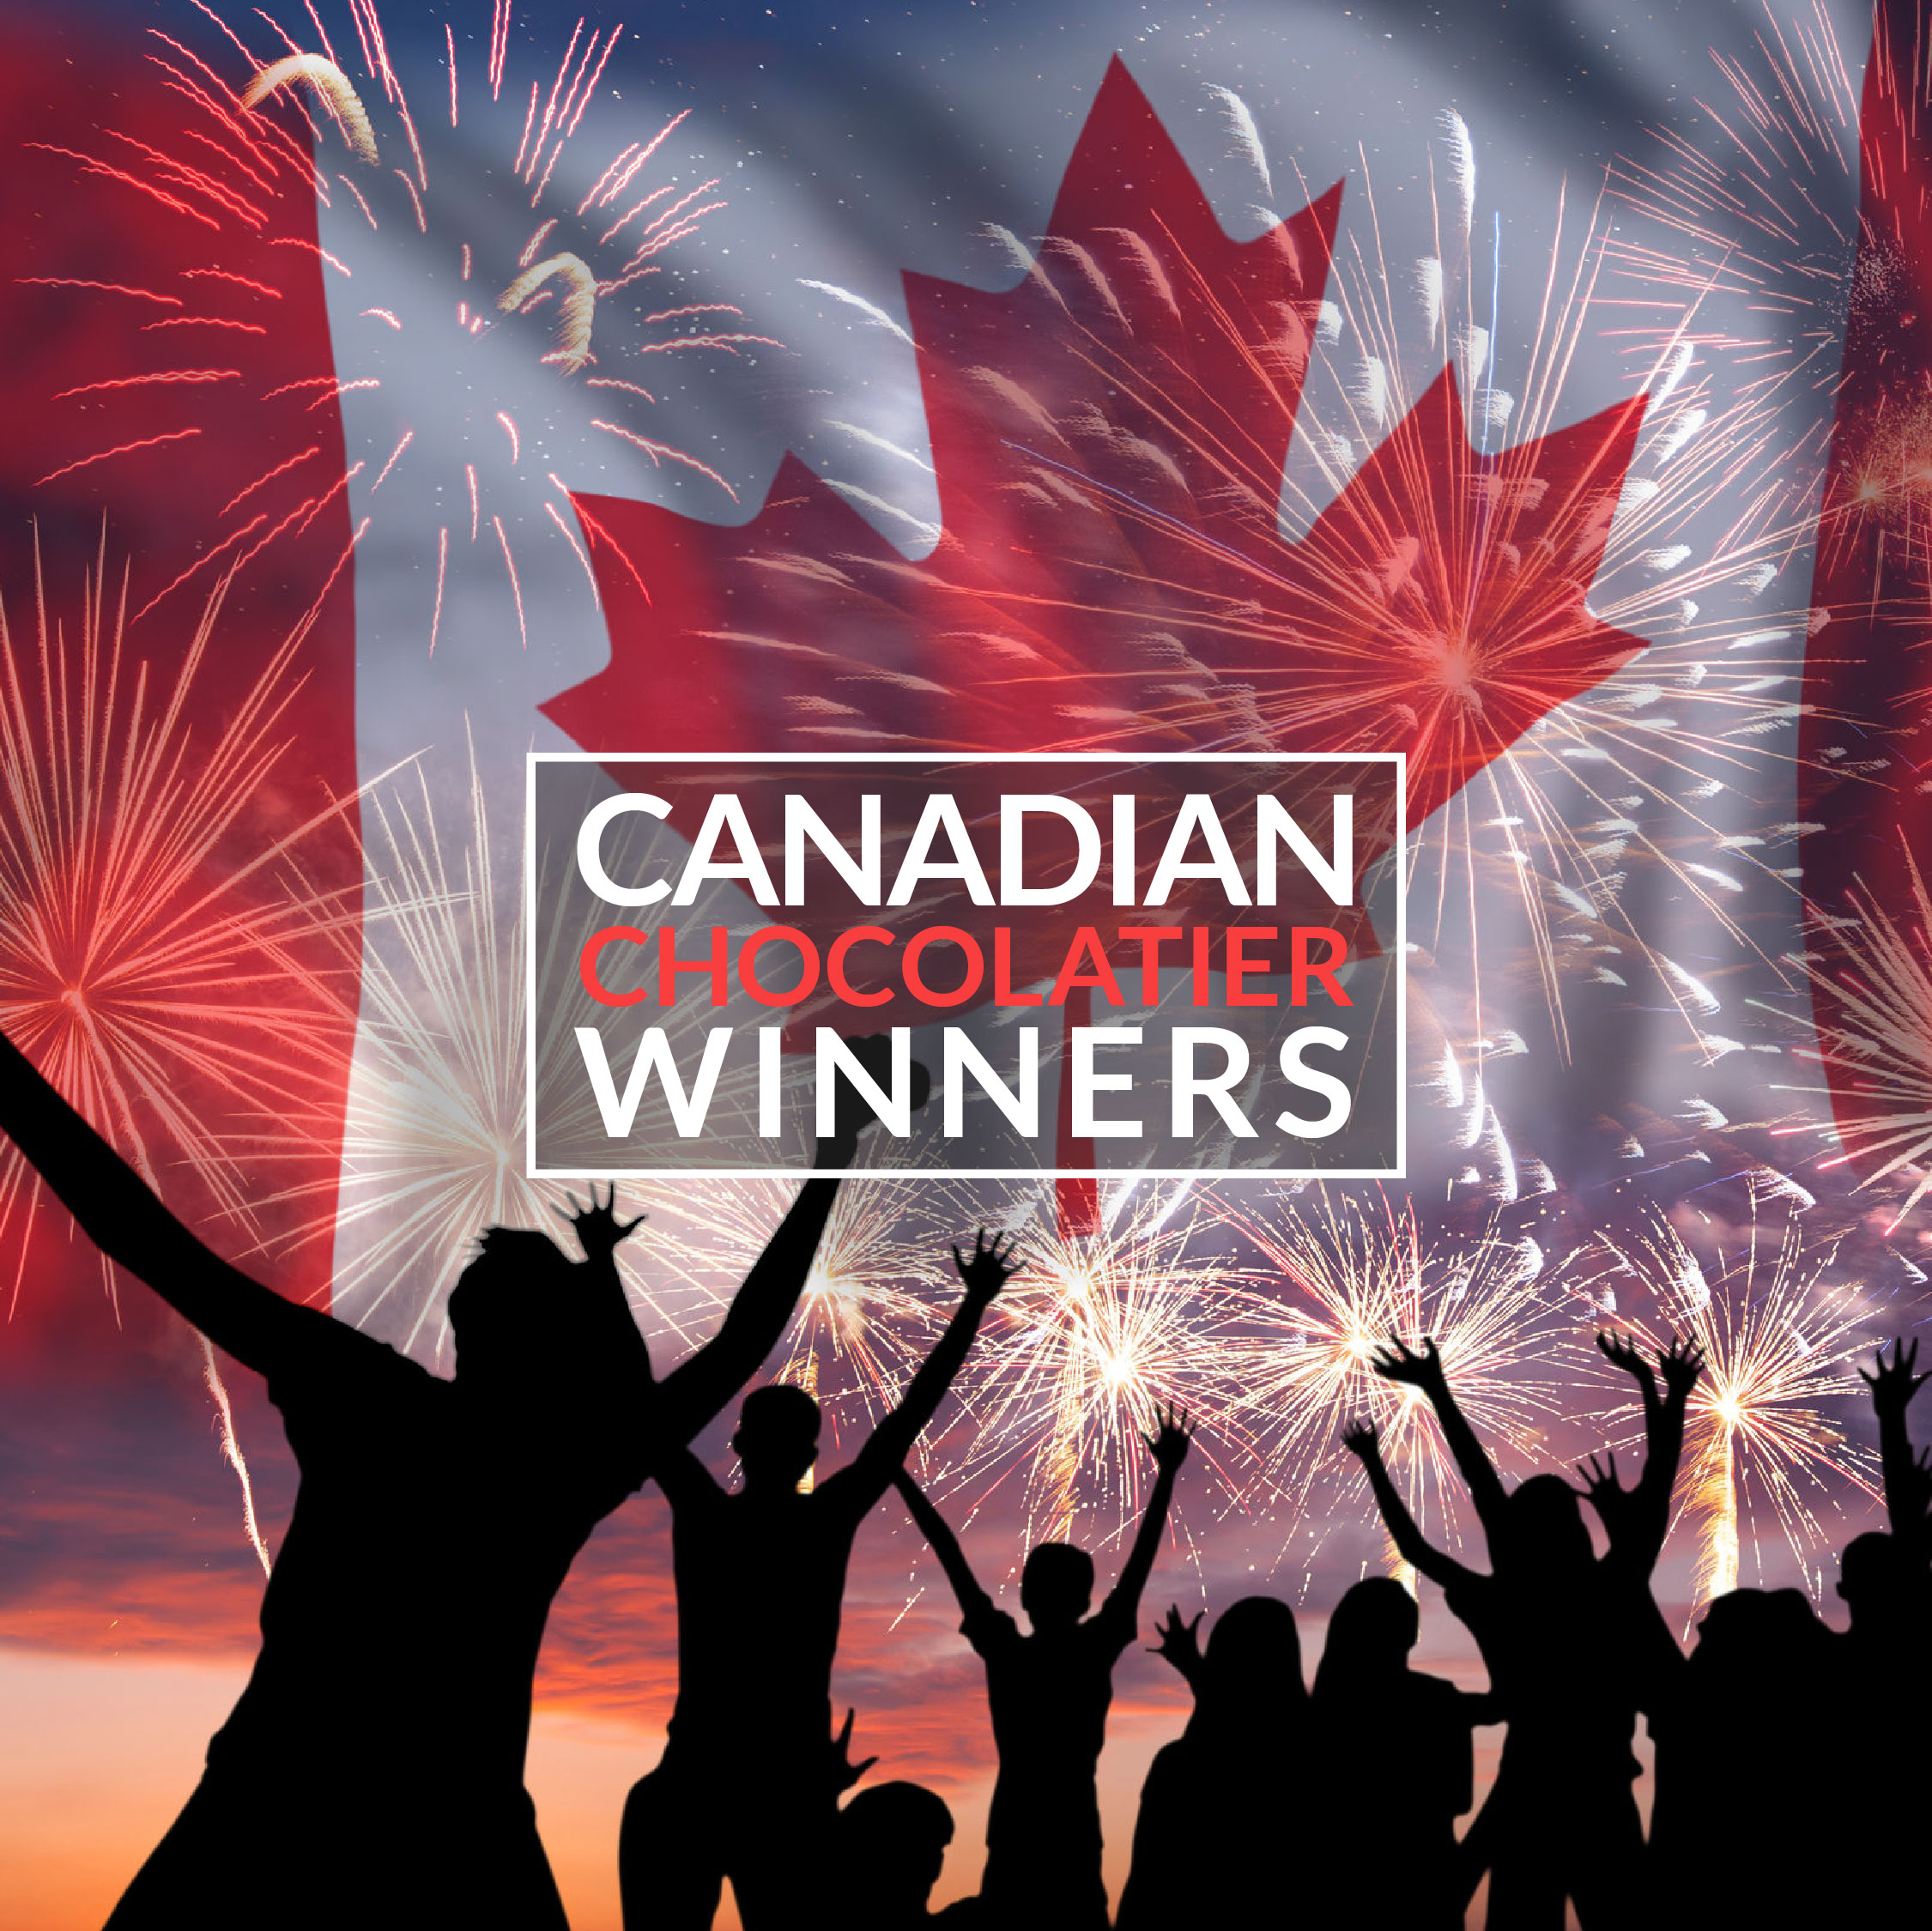 Canada winners-flag fireworks-teaser2